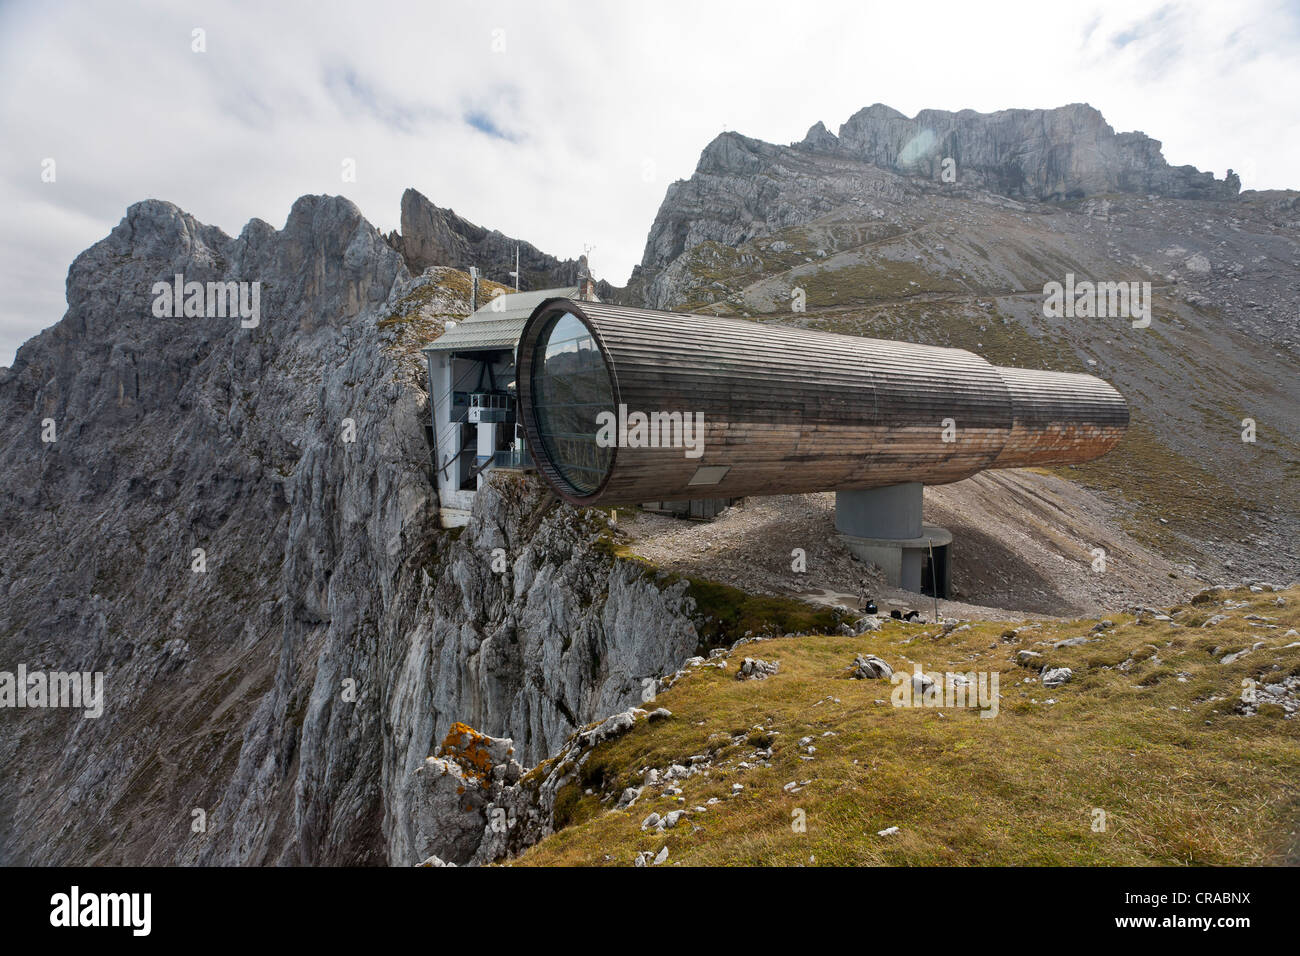 Telescope at the Bergwelt Karwendel nature information center, Karwendel mountains, Alps, Bavaria, Germany, Europe Stock Photo